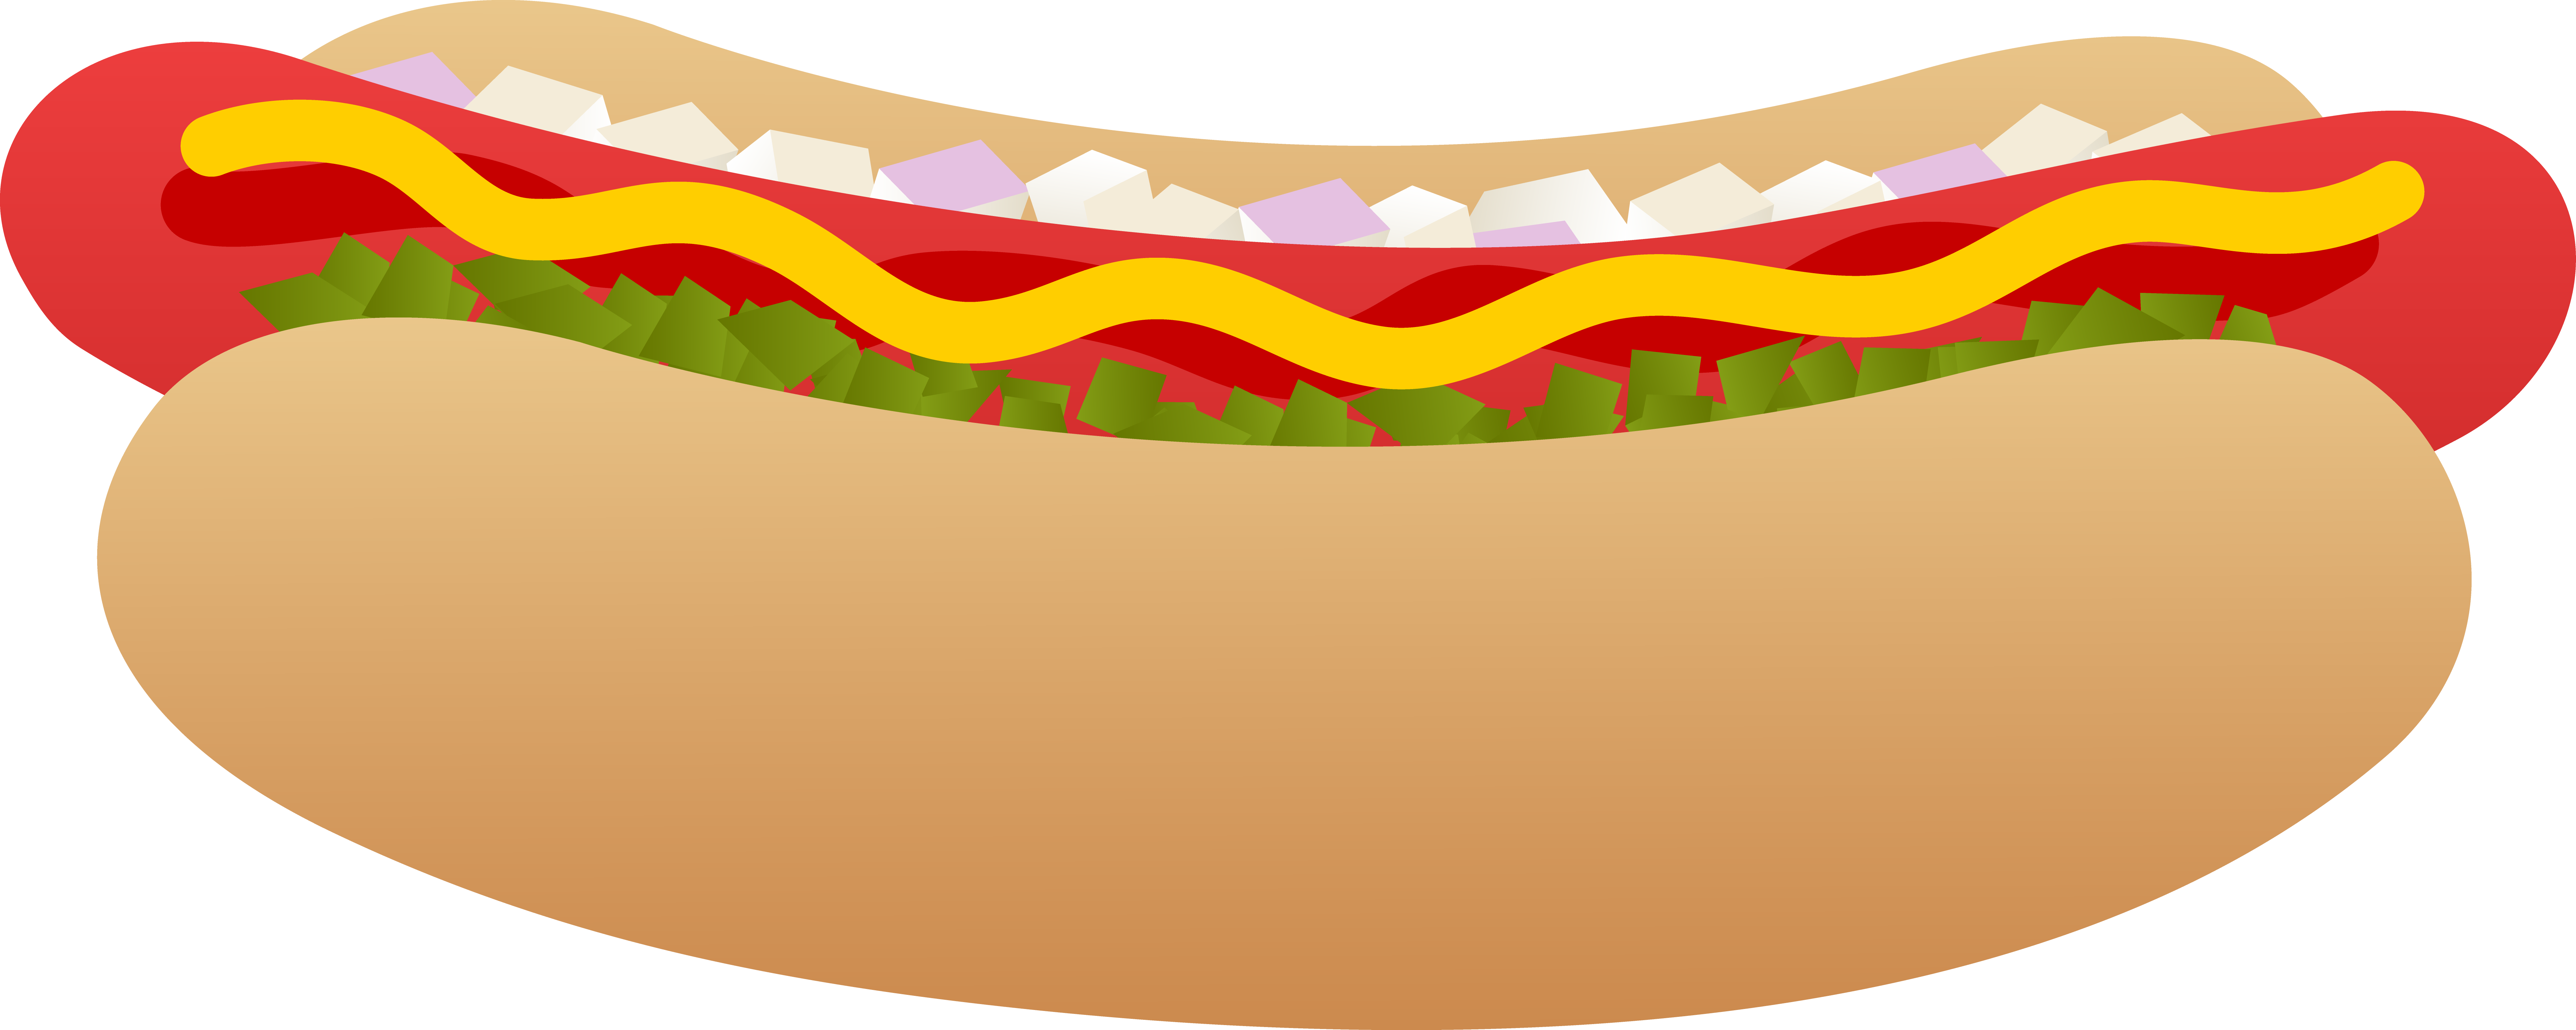 Hot Dog Png Image PNG Image